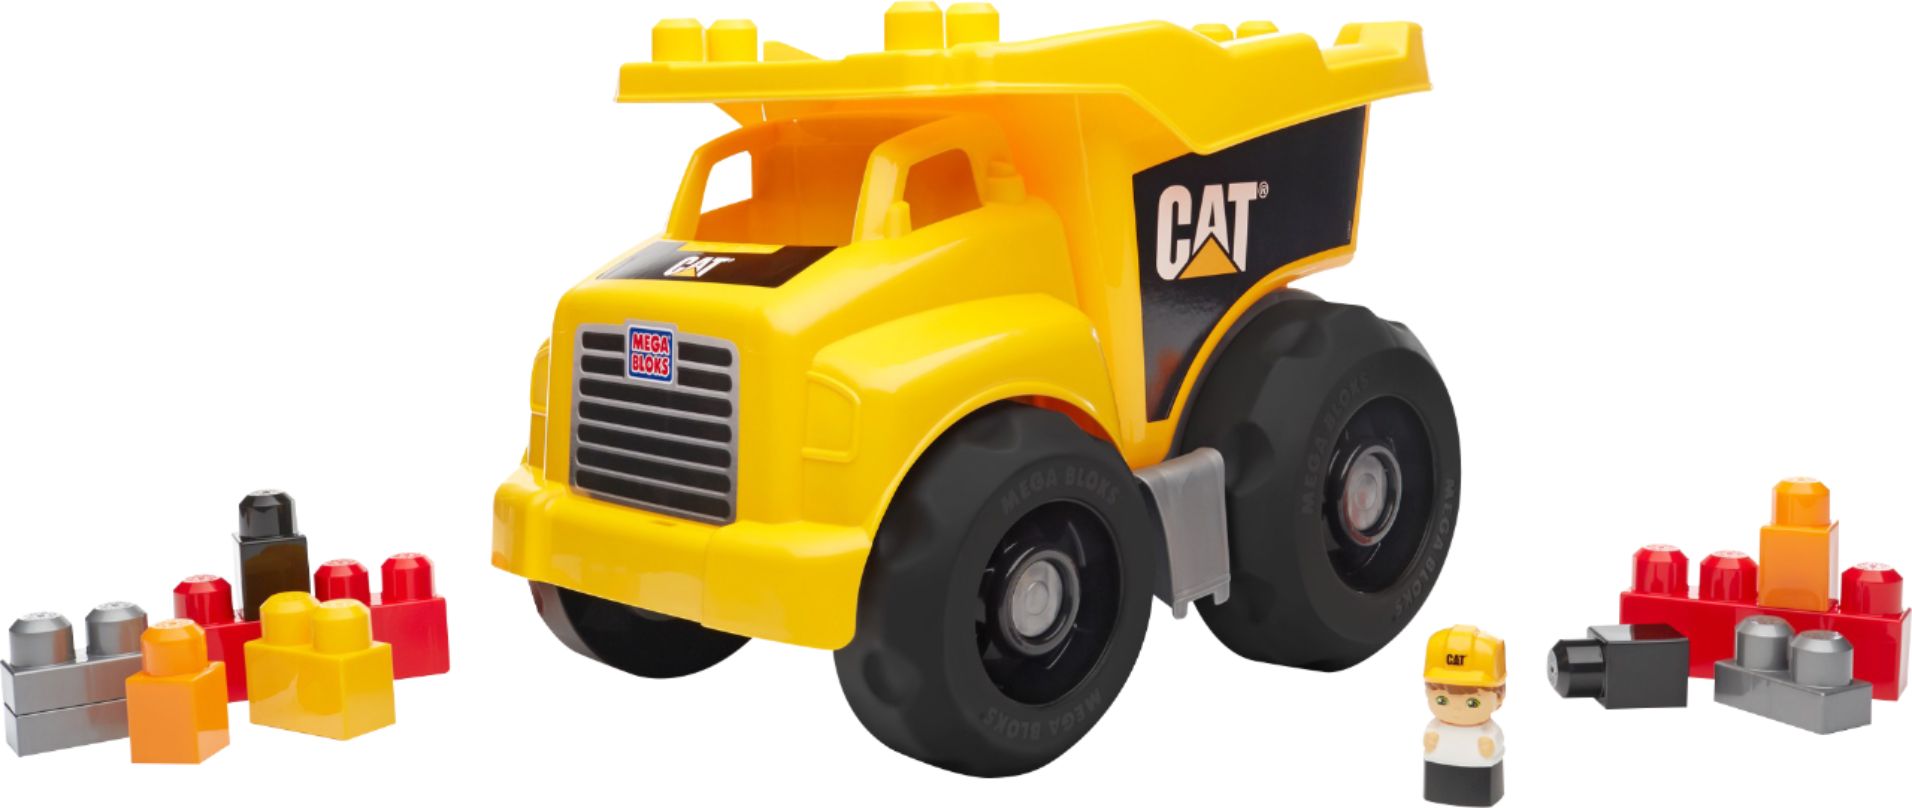 Mega Bloks DCJ86 Caterpillar Large Dump Truck Yellow for sale online